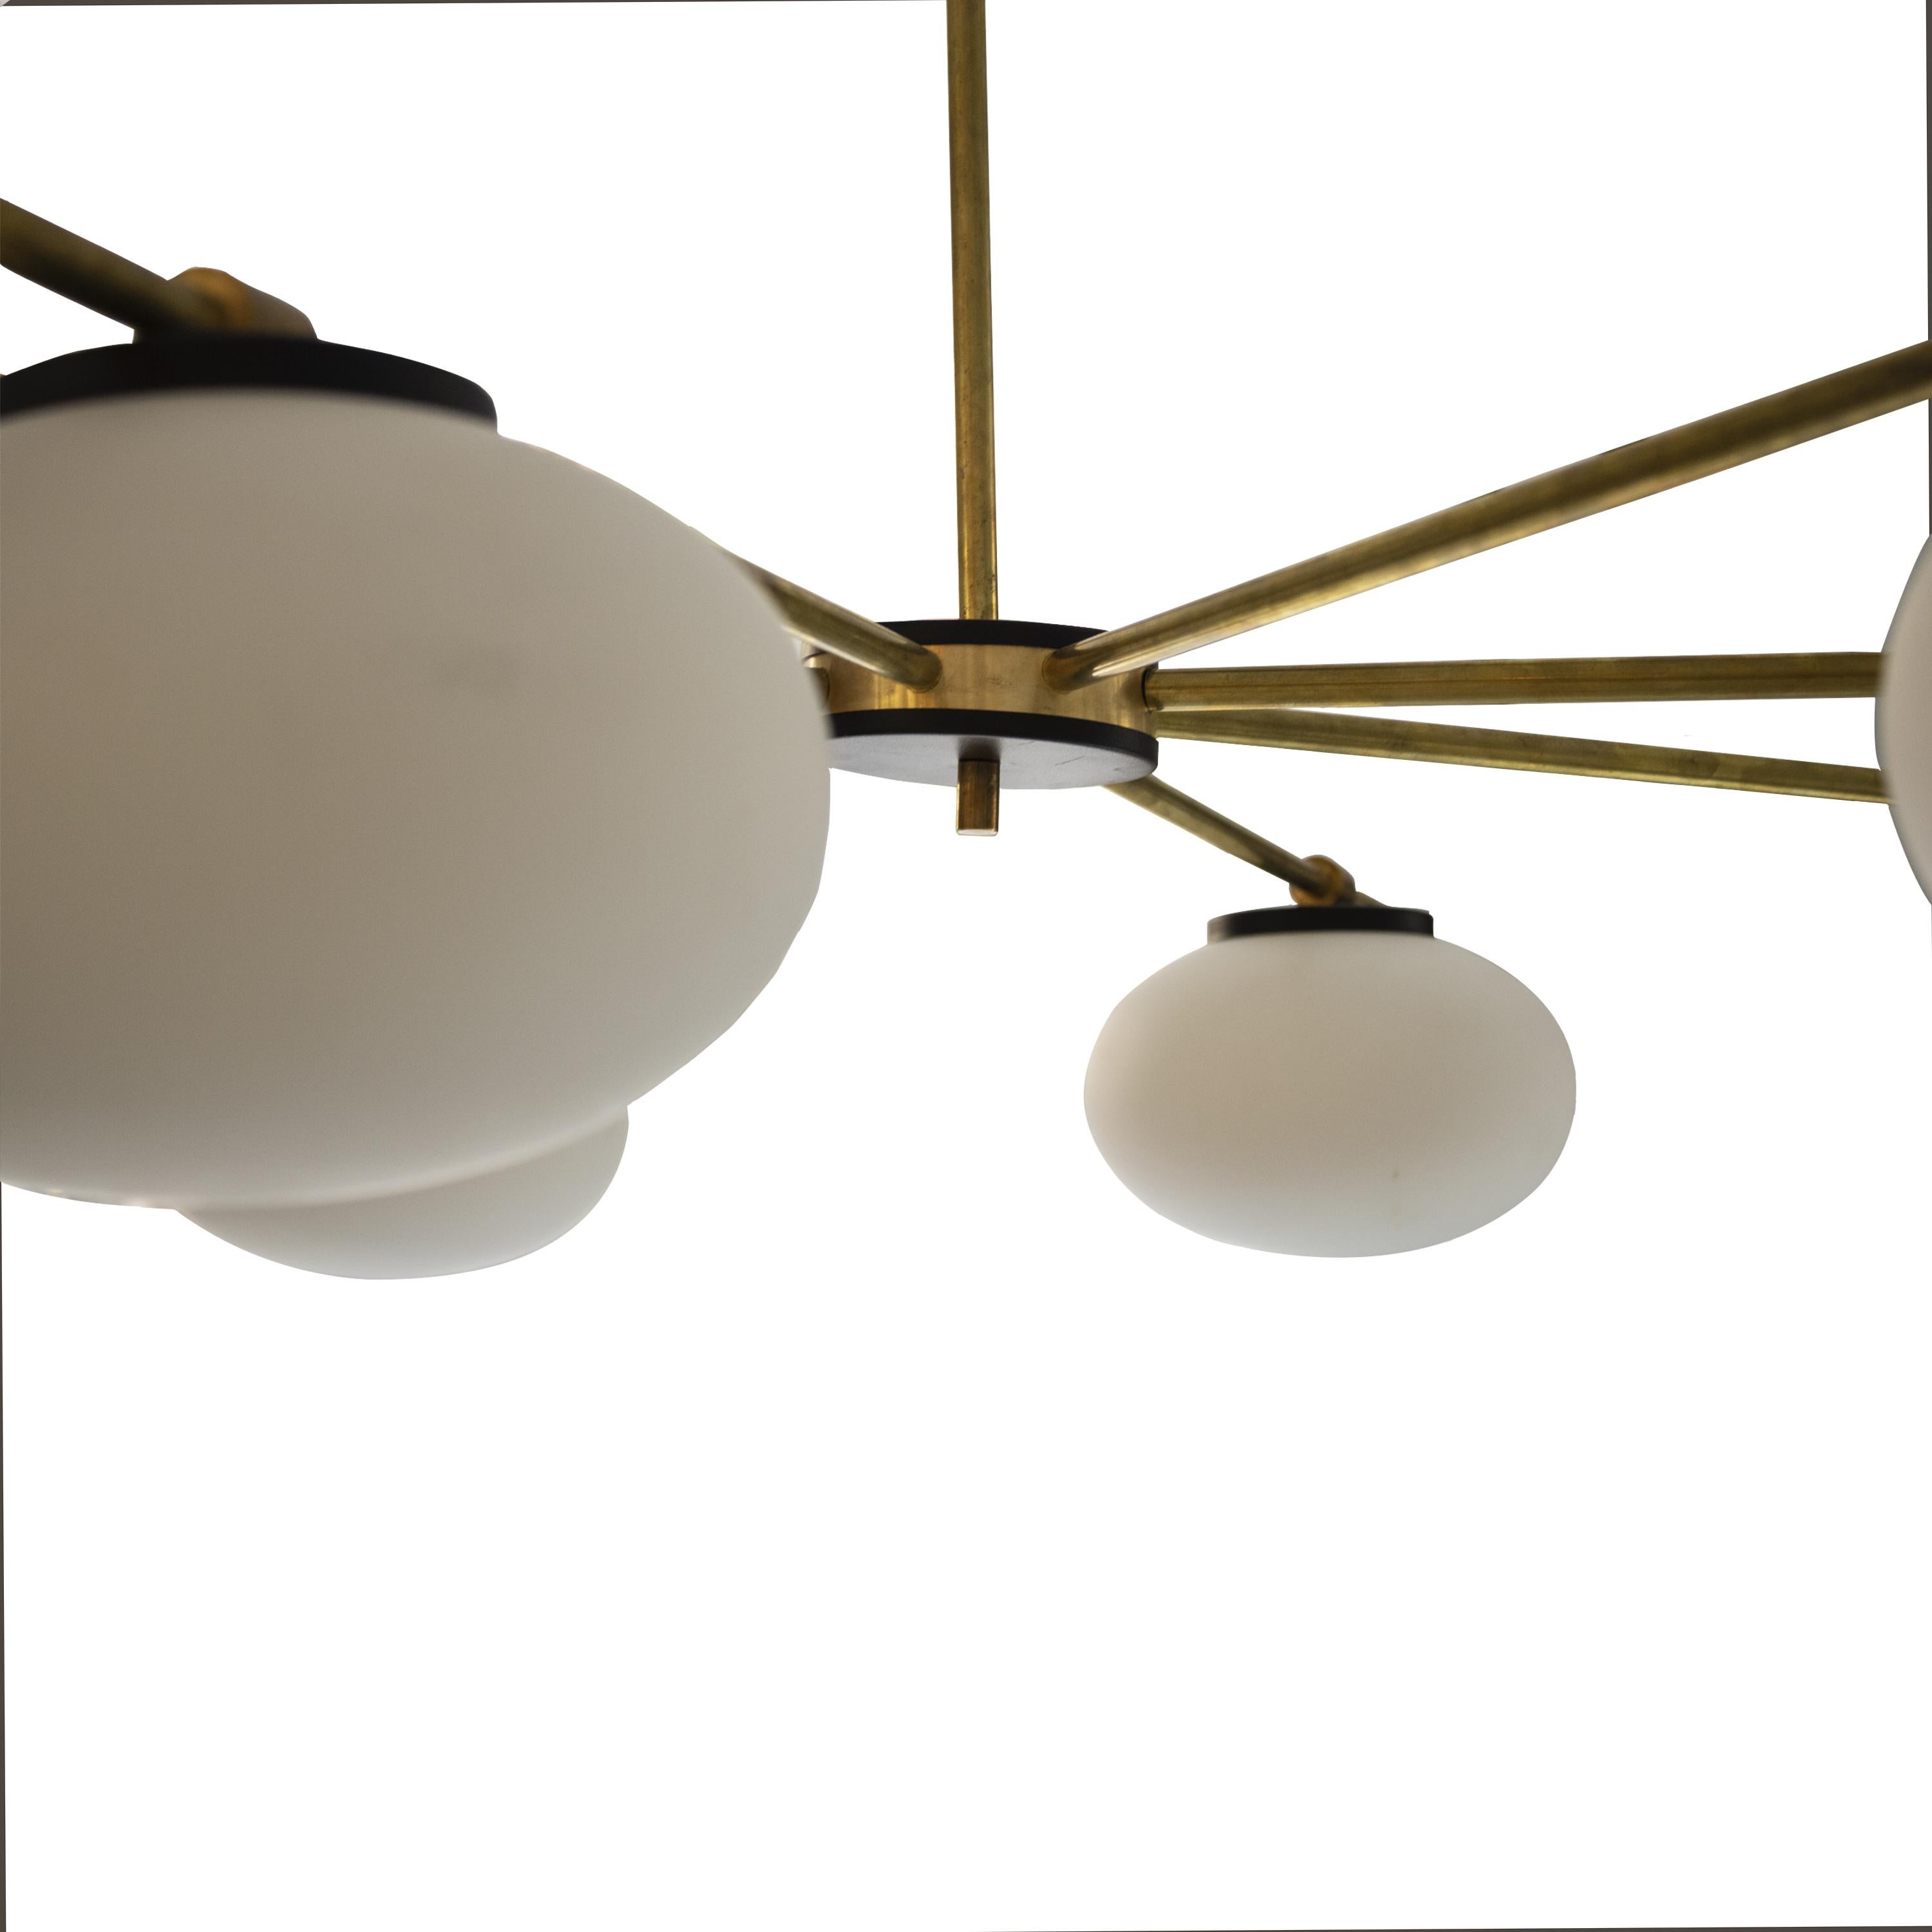 Spanish Contemporary Stilnovo Style Brass Glass Suspension Lamp by IKB191, Spain, 2020